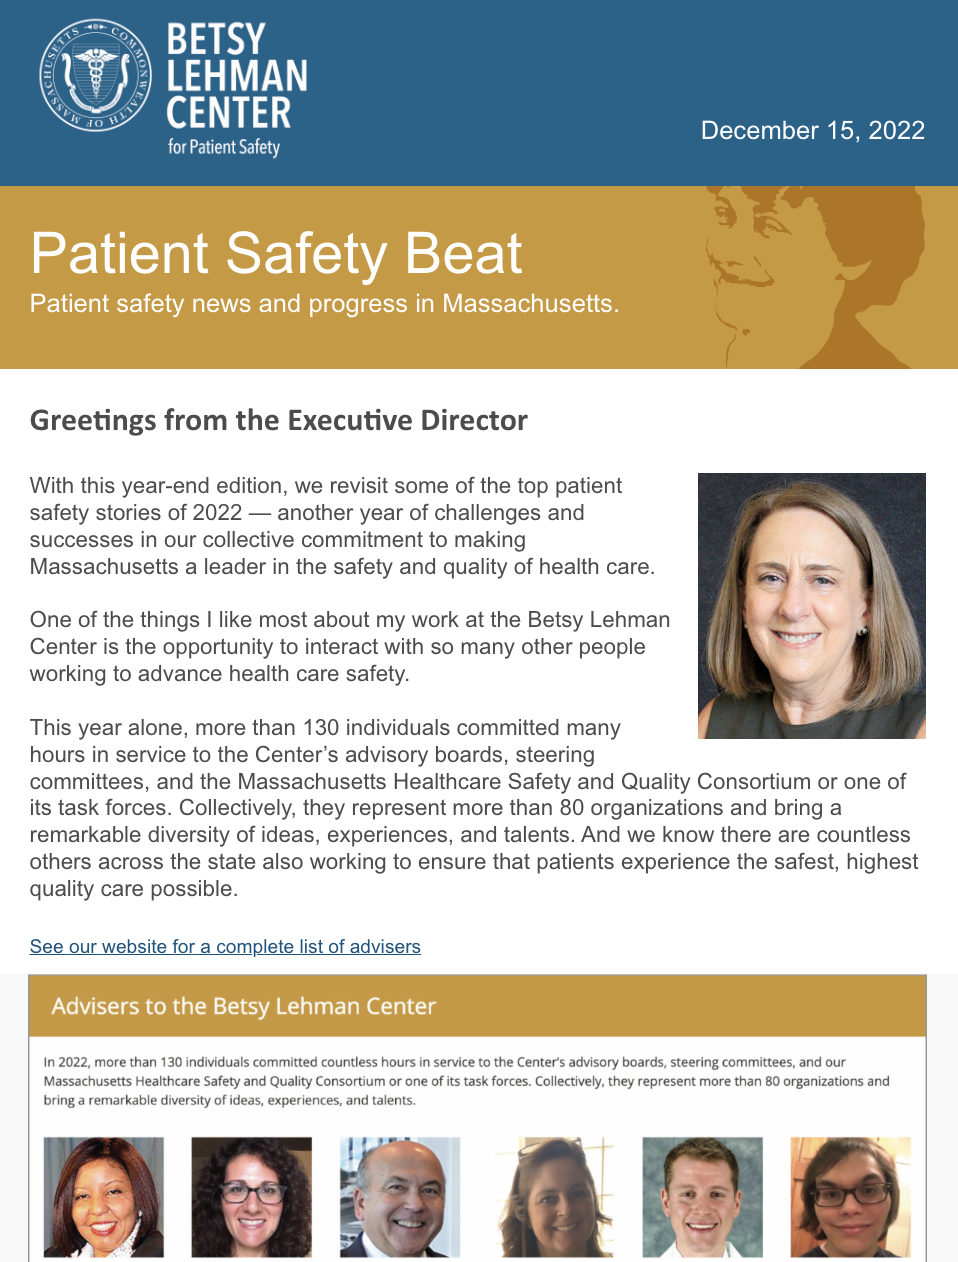 December 15, 2022: Patient Safety Beat